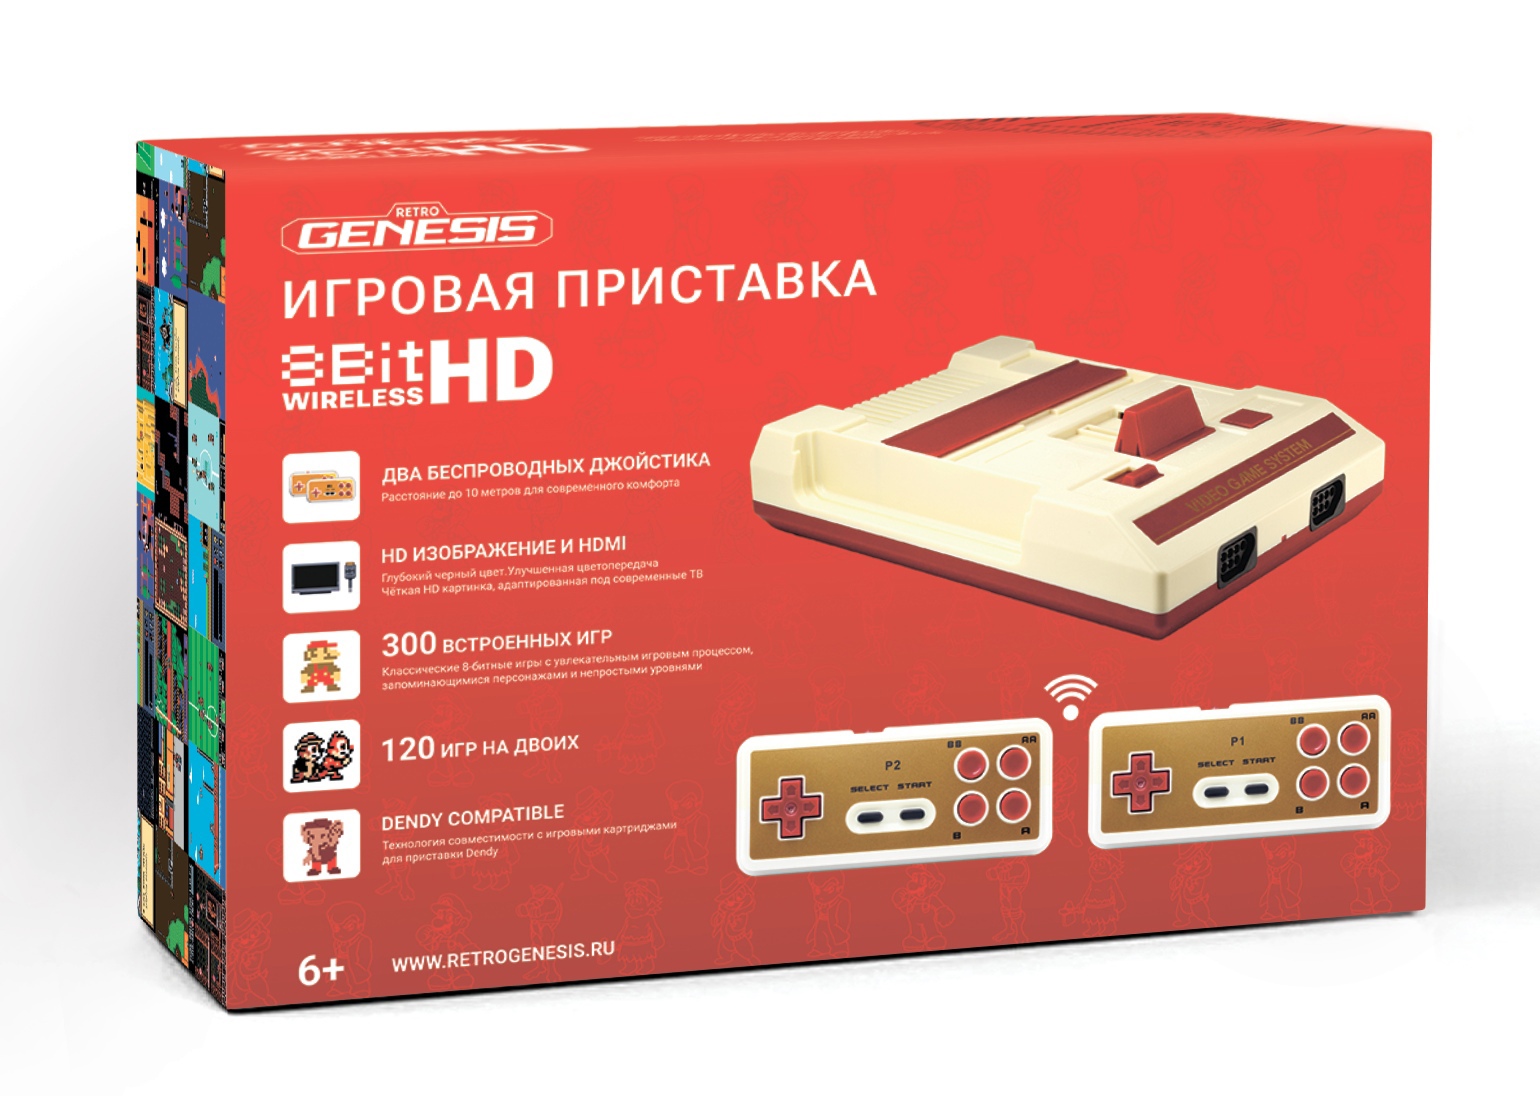 Retro Genesis 8 Bit HD Wireless 